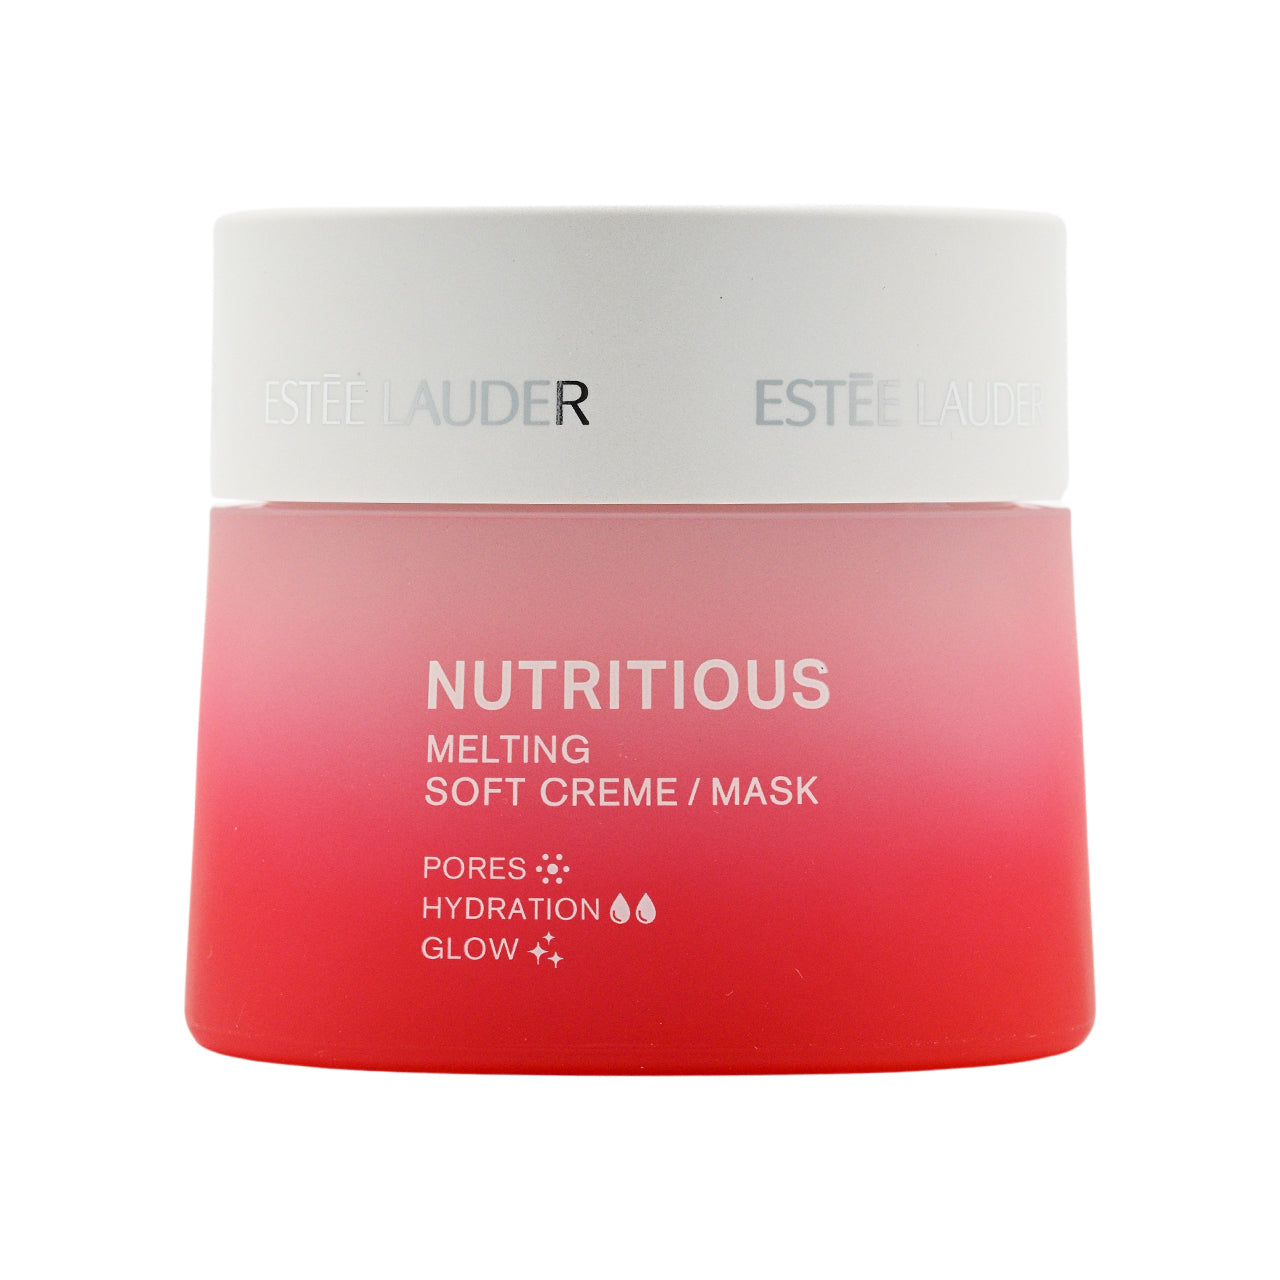 Estee Lauder Nutritious Melting Soft Creme/Mask Moisturizer